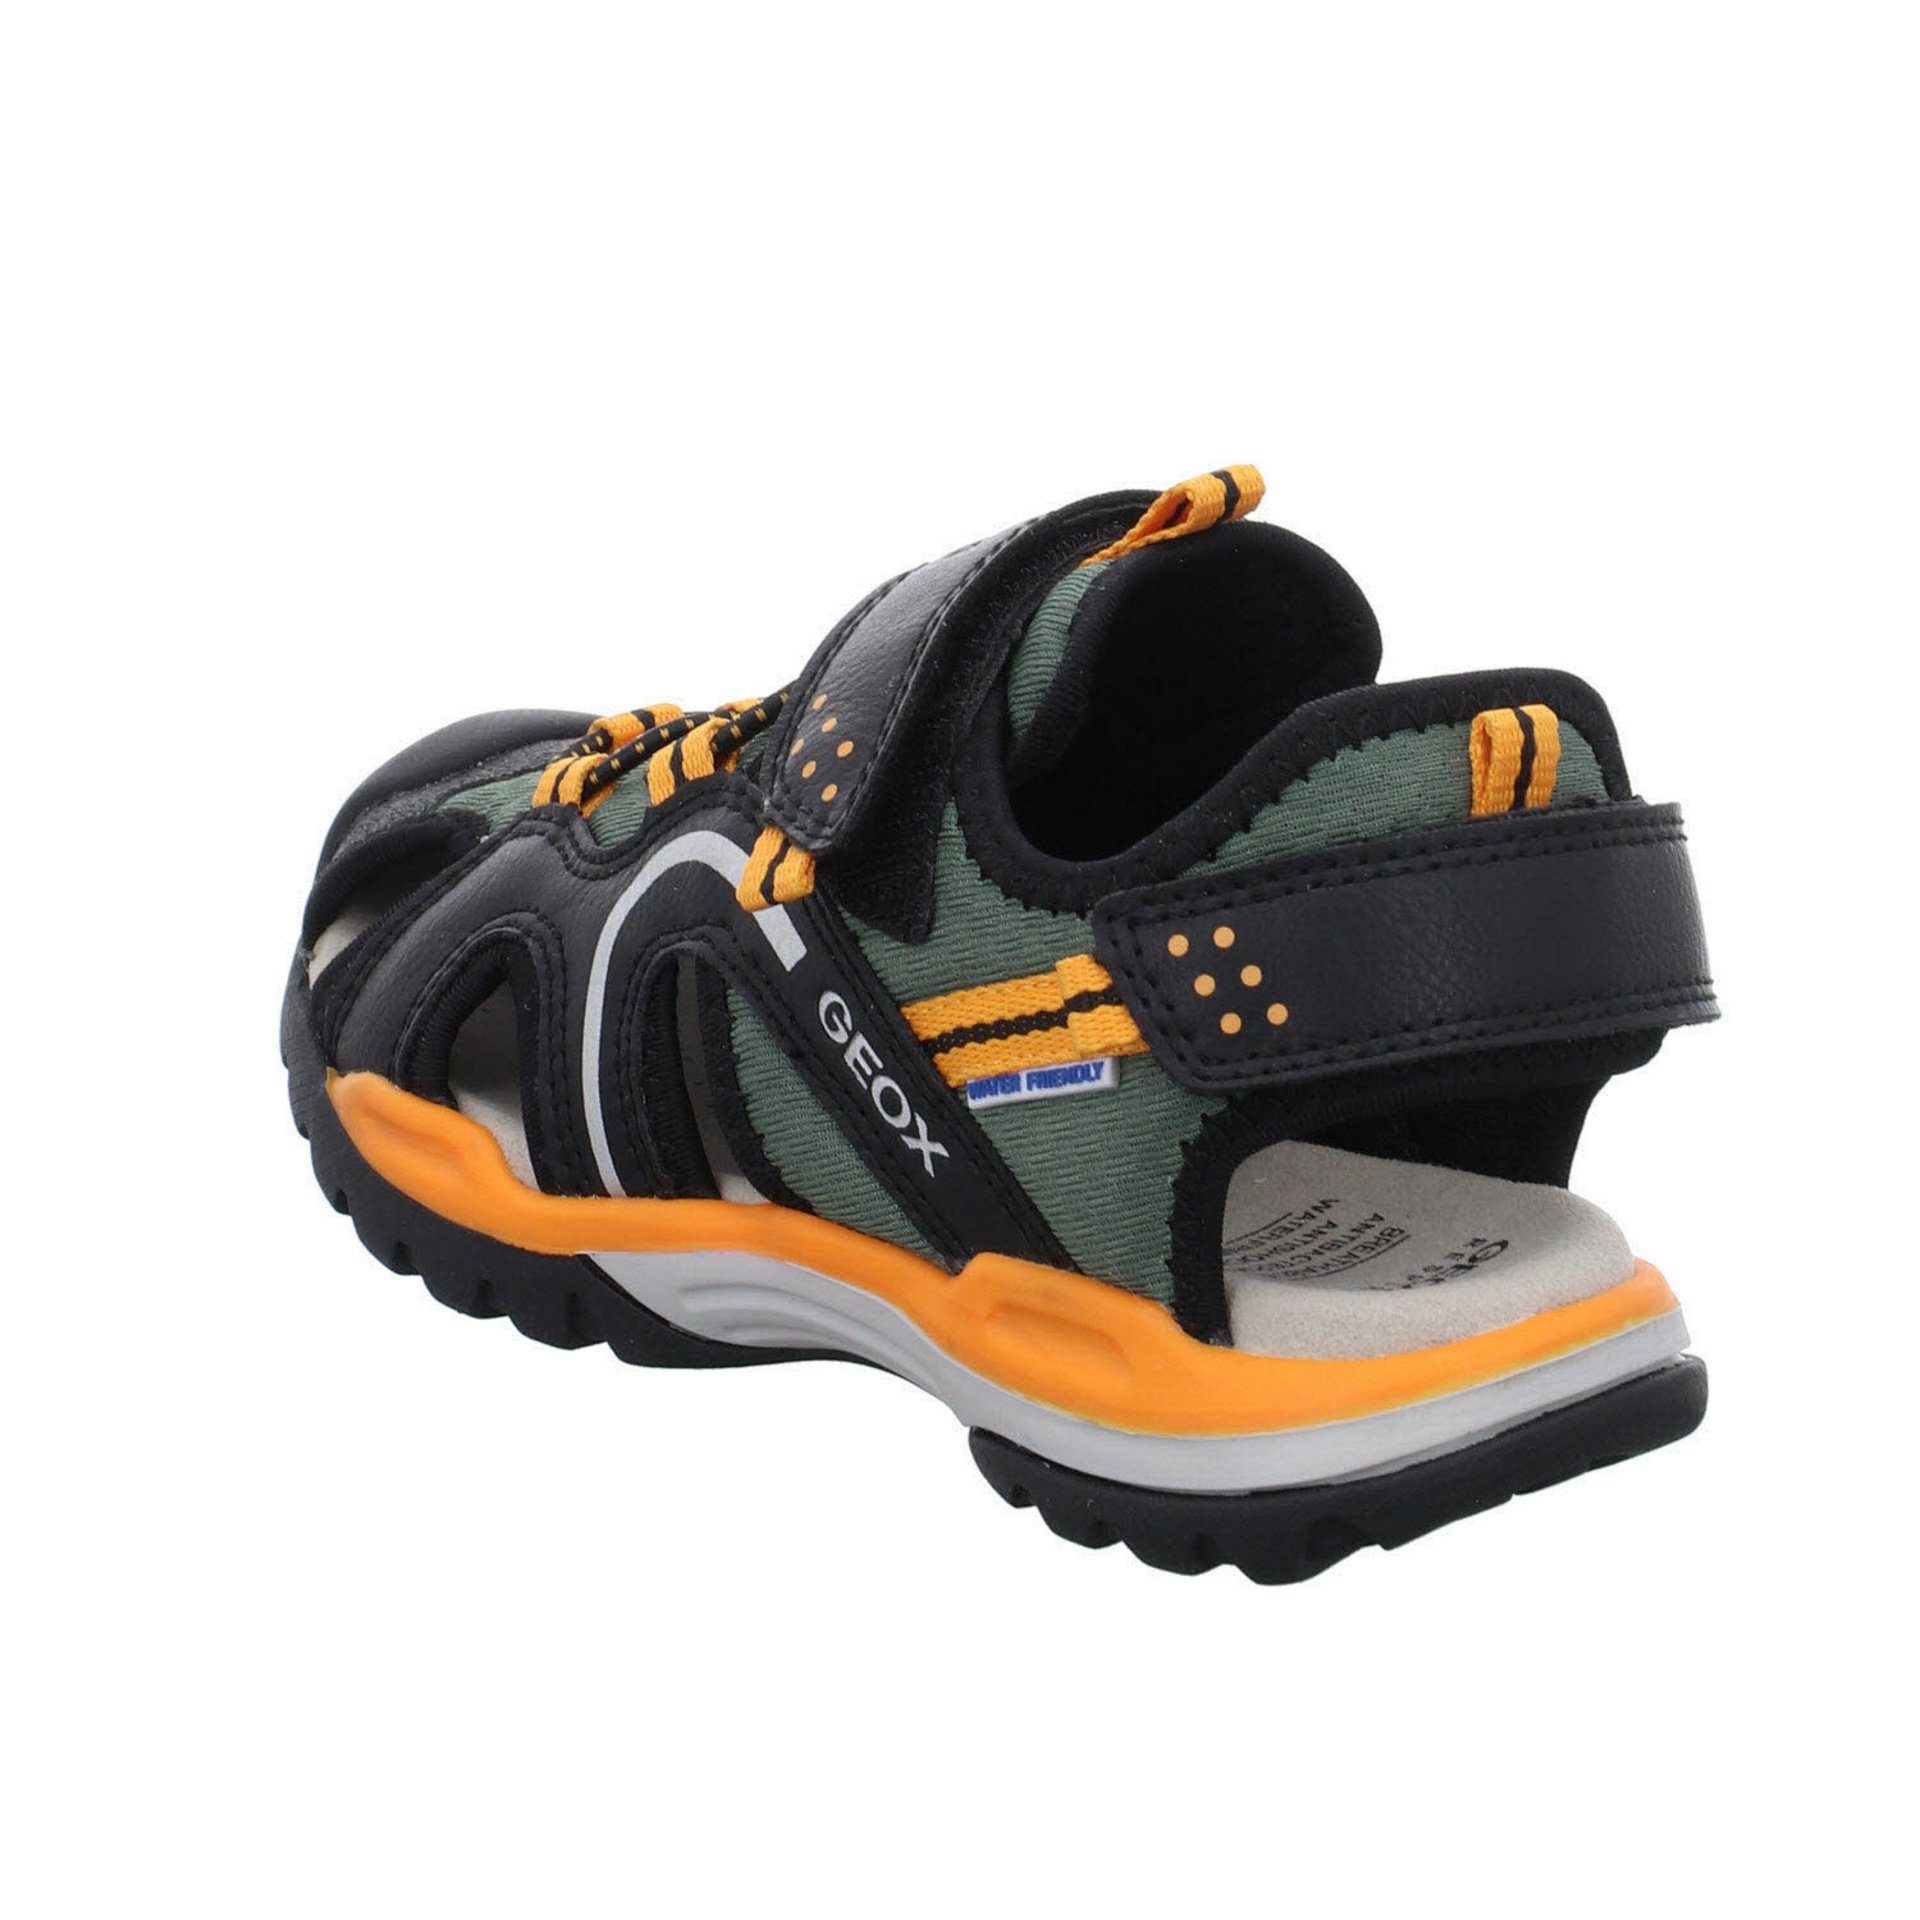 Schuhe Borealis Sandalen Schwarz Sandale Orange Outdoorsandale Geox Synthetikkombination Jungen